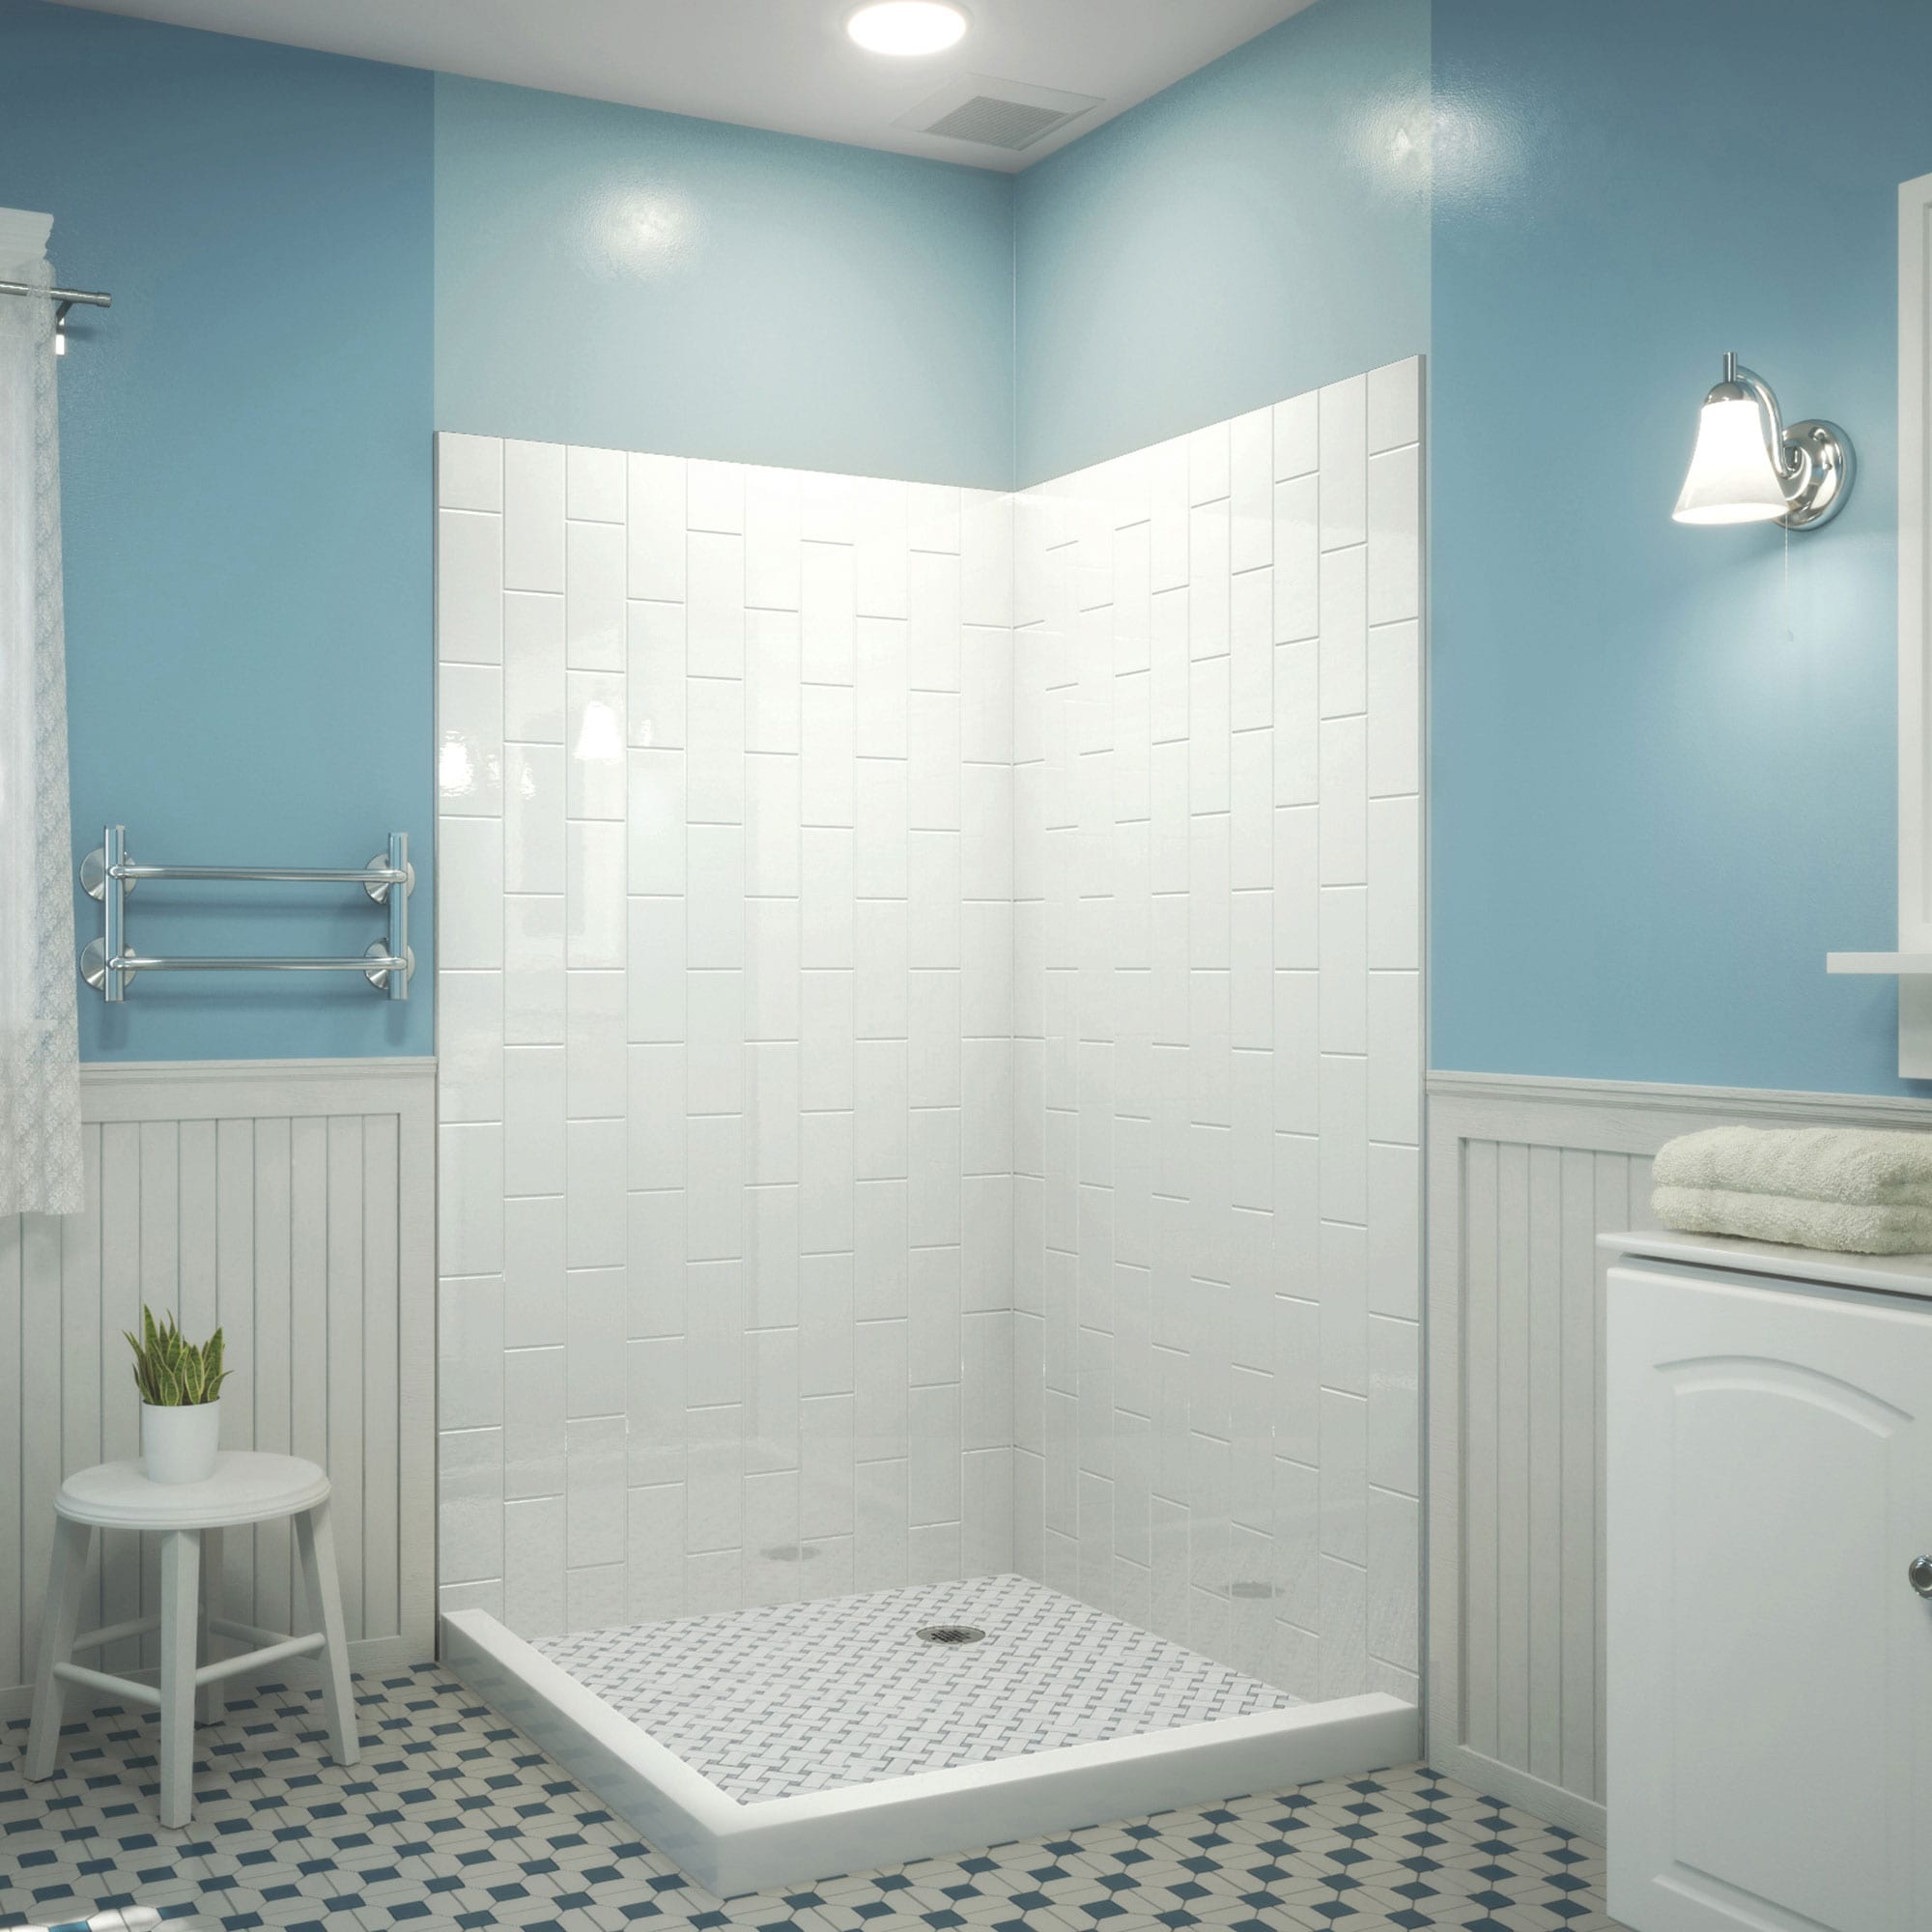 2 Pcs Adhesive Bathroom Shower Corner Shelf Wall Mounted, Shower